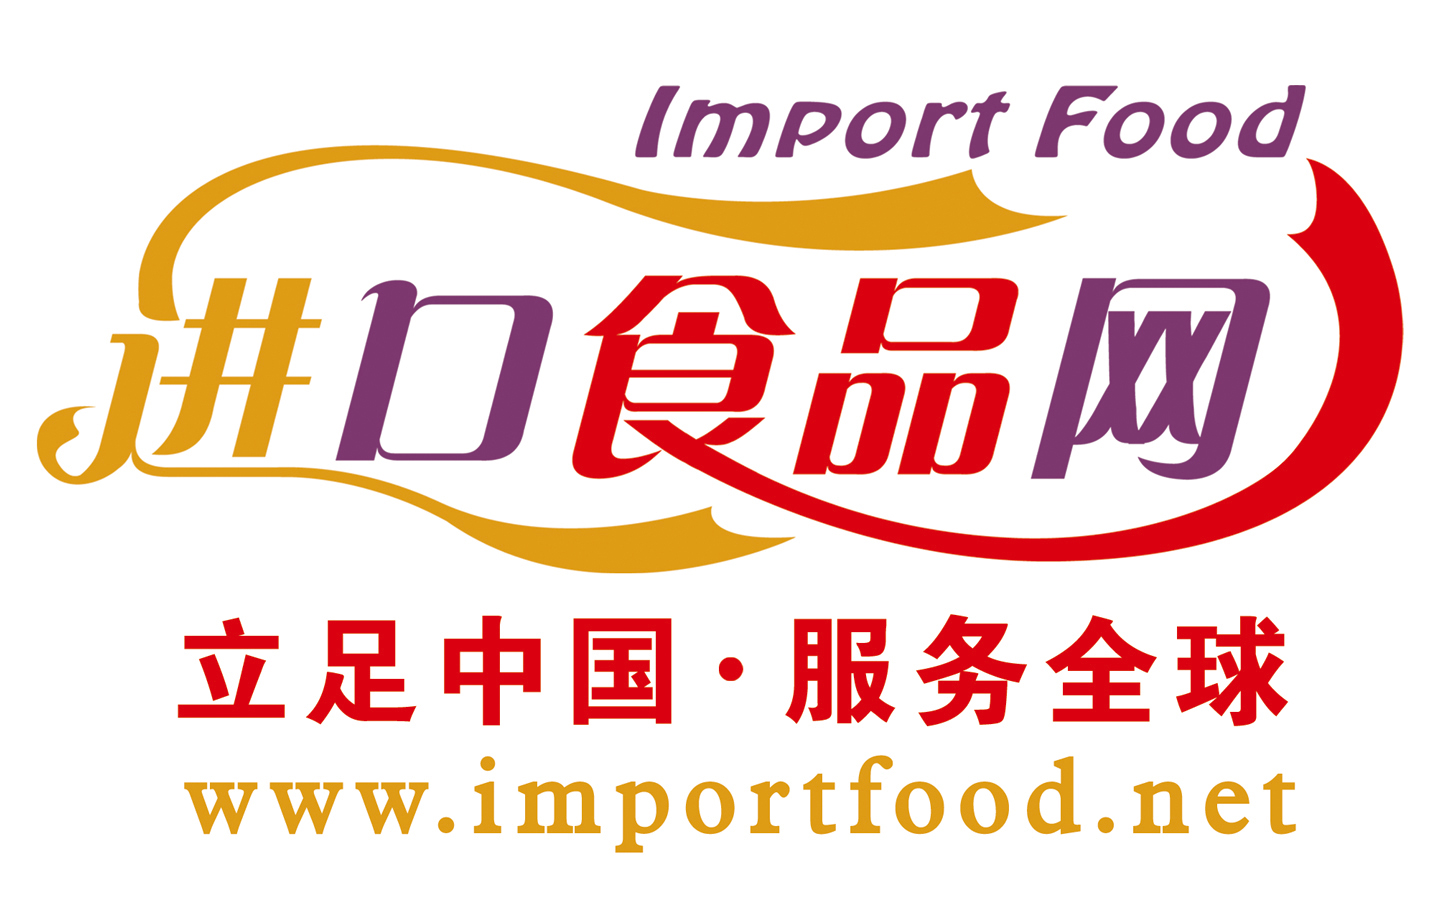 进口食品网www.importfood.net.jpg